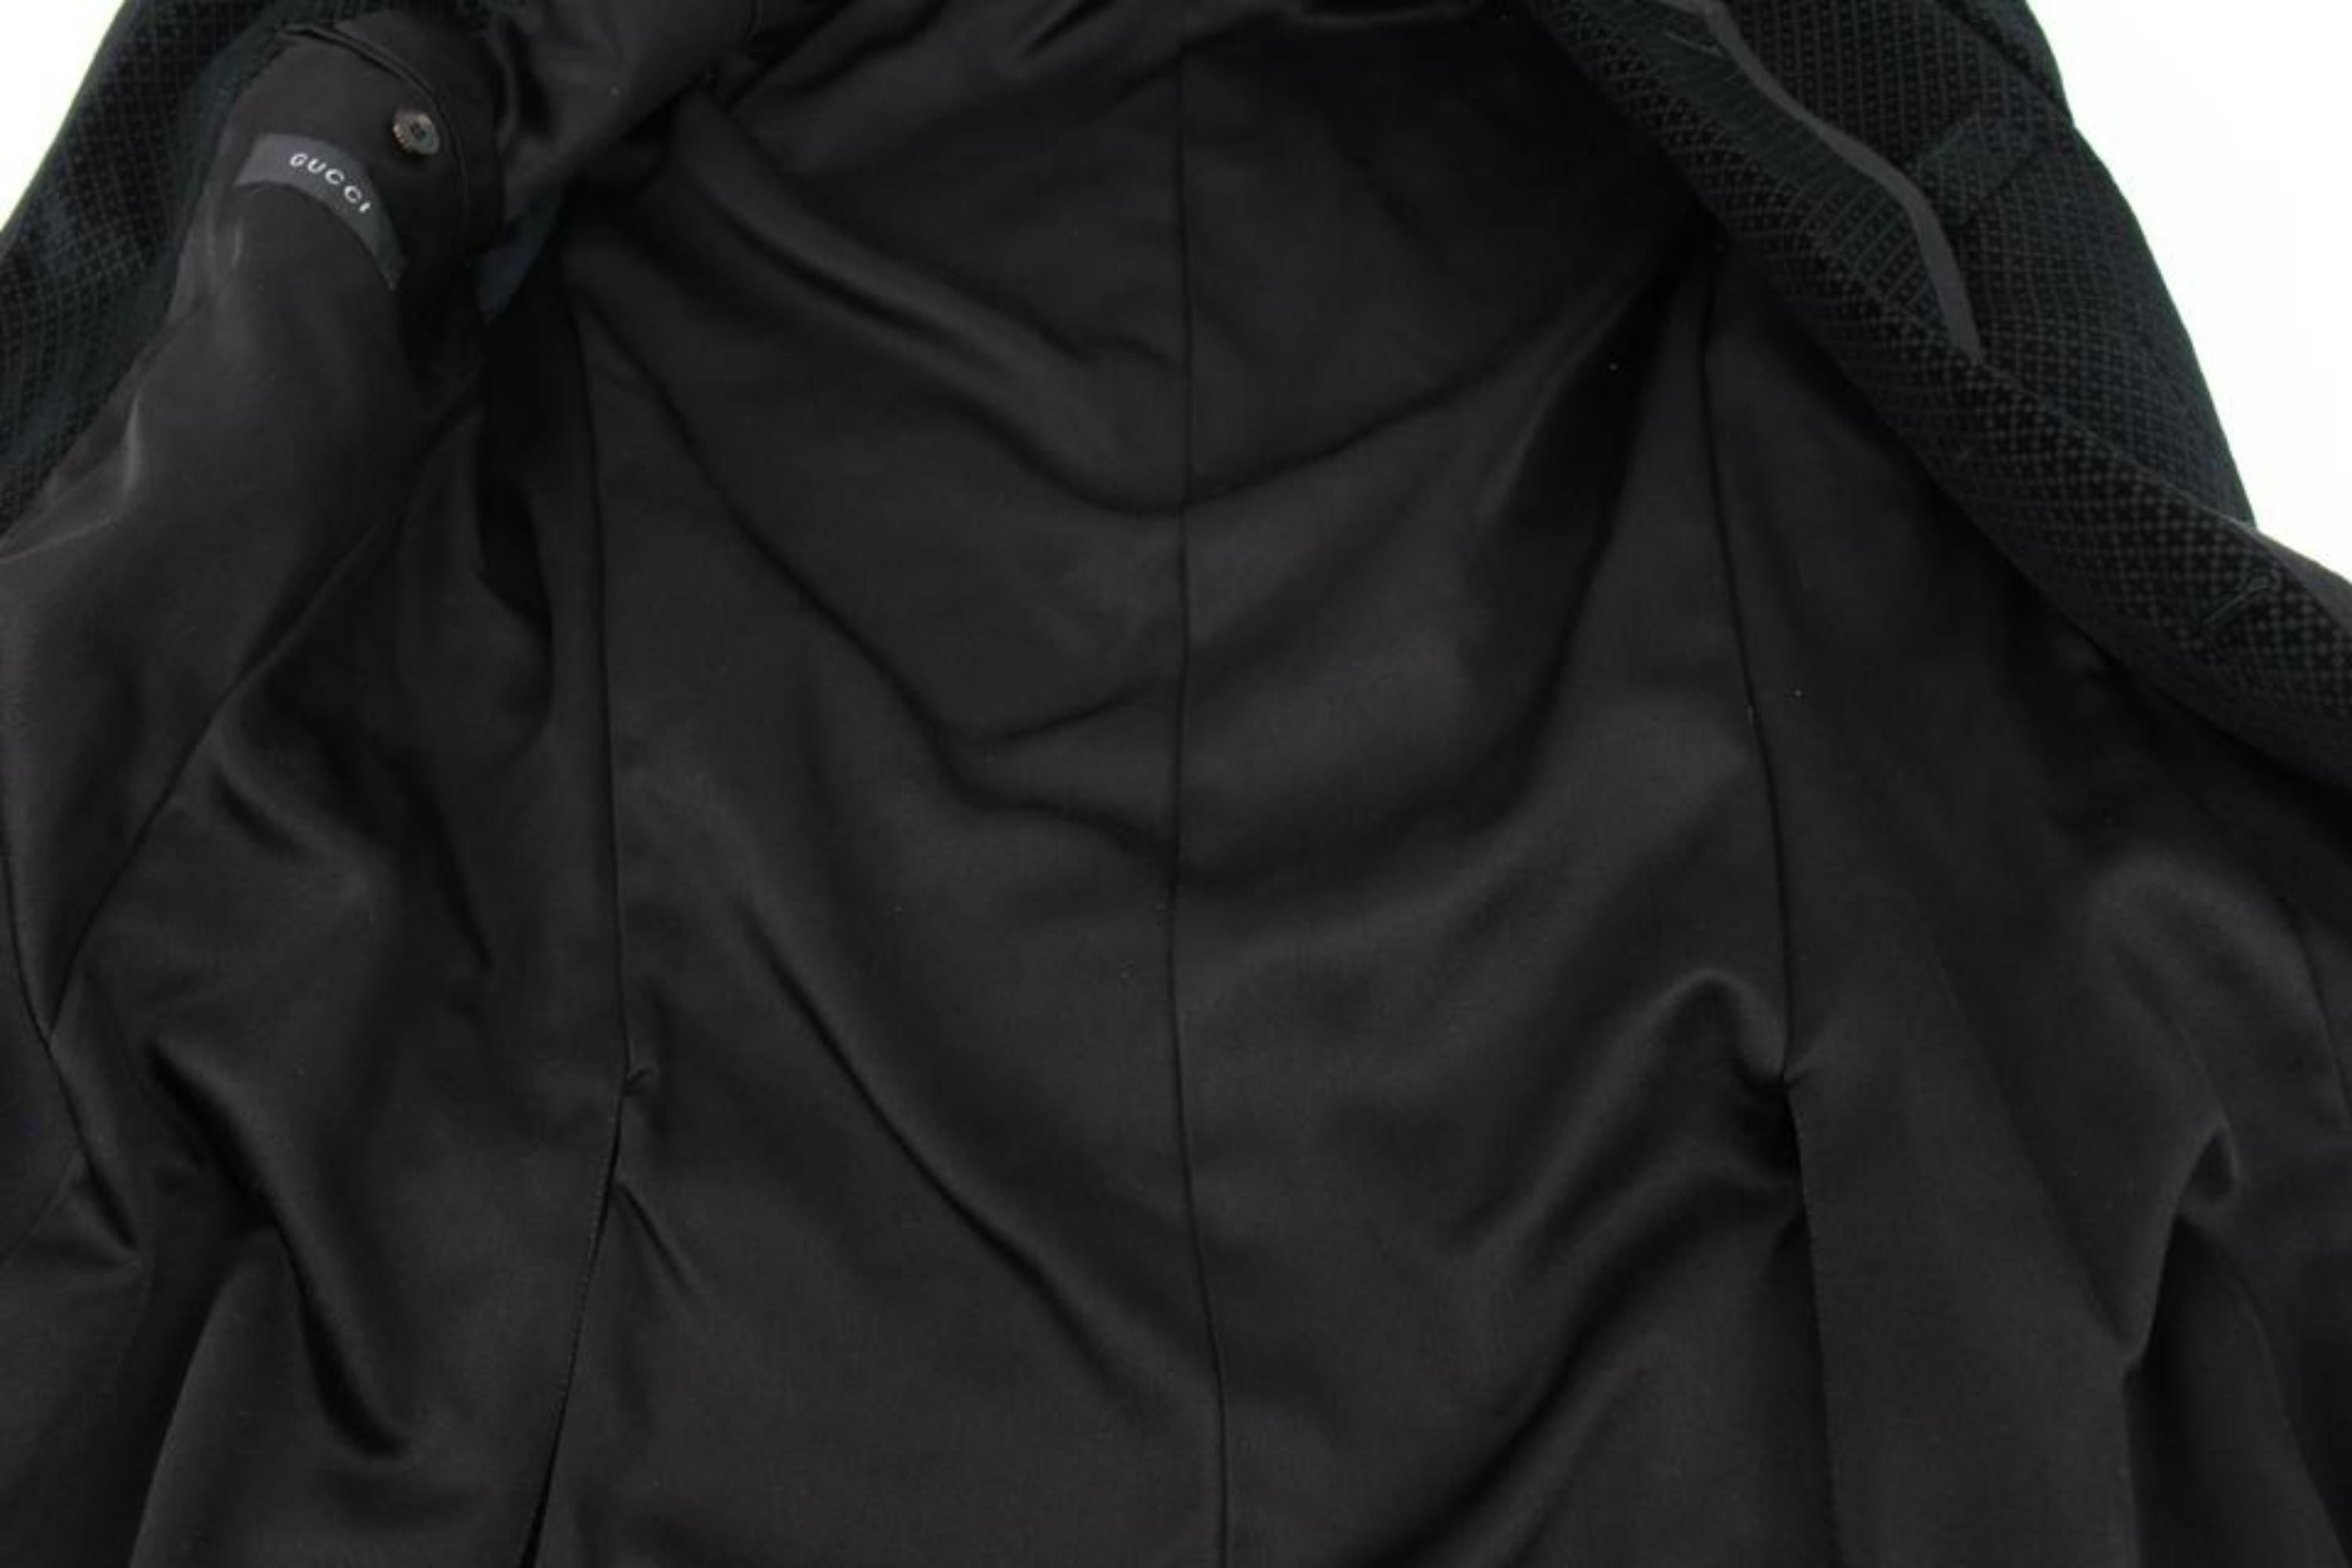 Gucci Men's Large Black Diamante Velvet Formal Smoking Jacket 125g27 For Sale 3